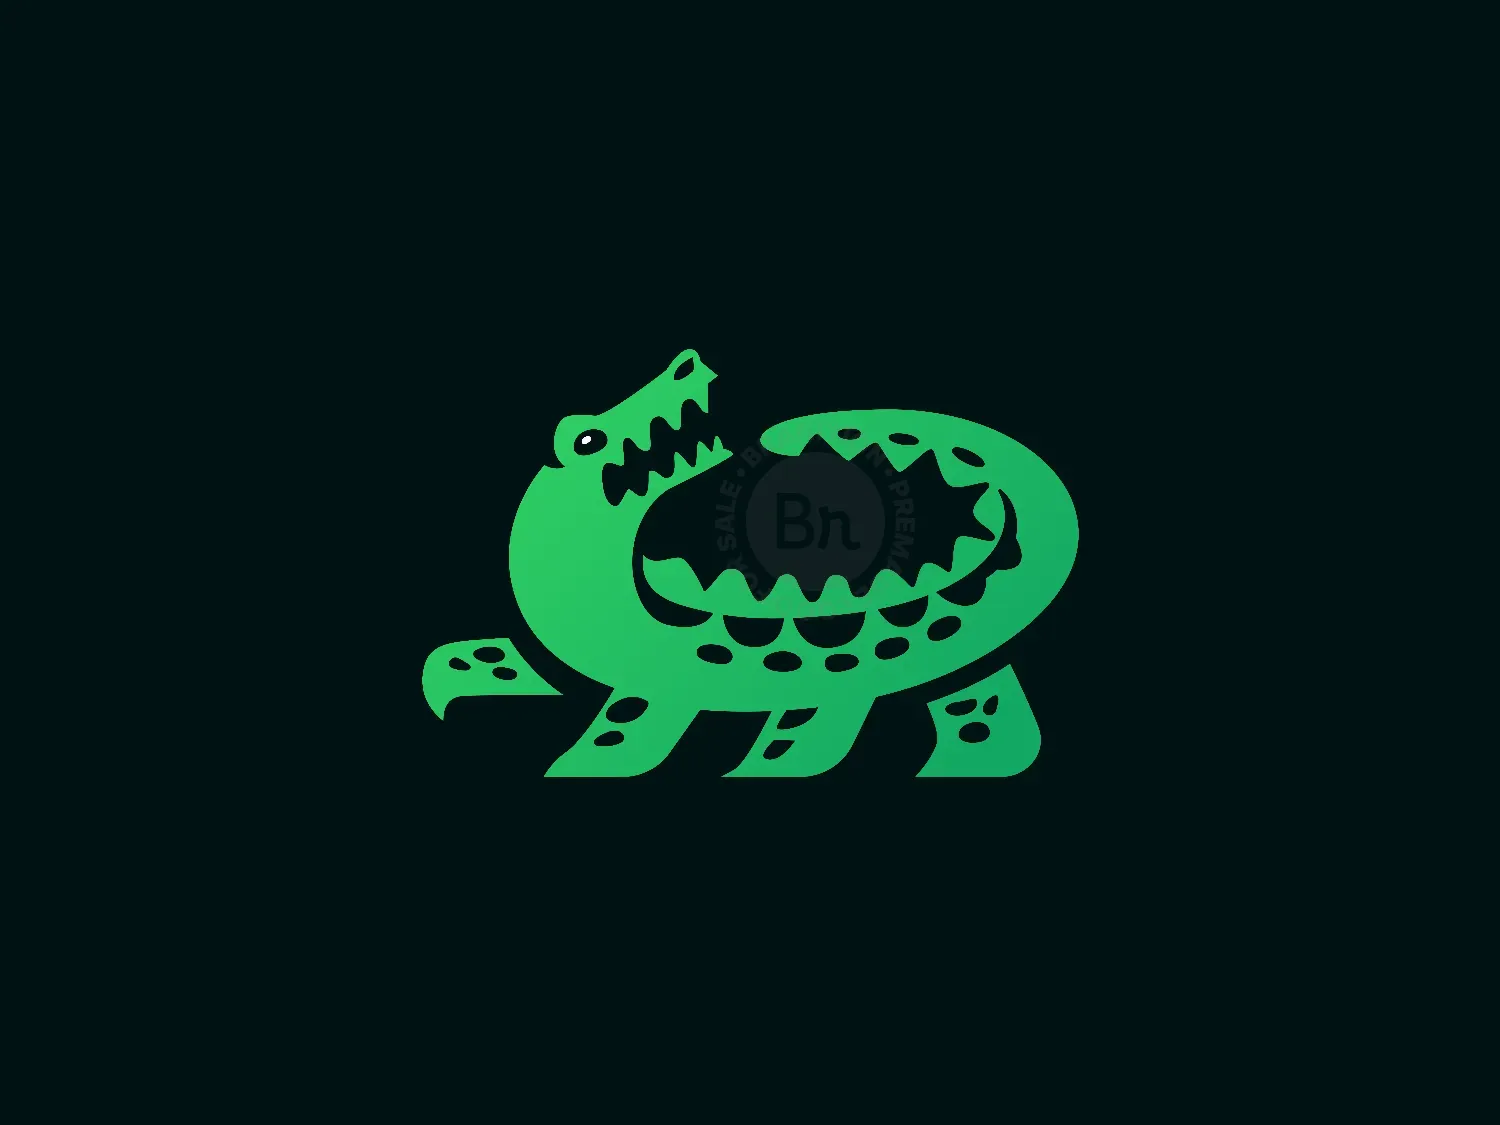 Lacoste swaps famous crocodile logo for ten endangered species